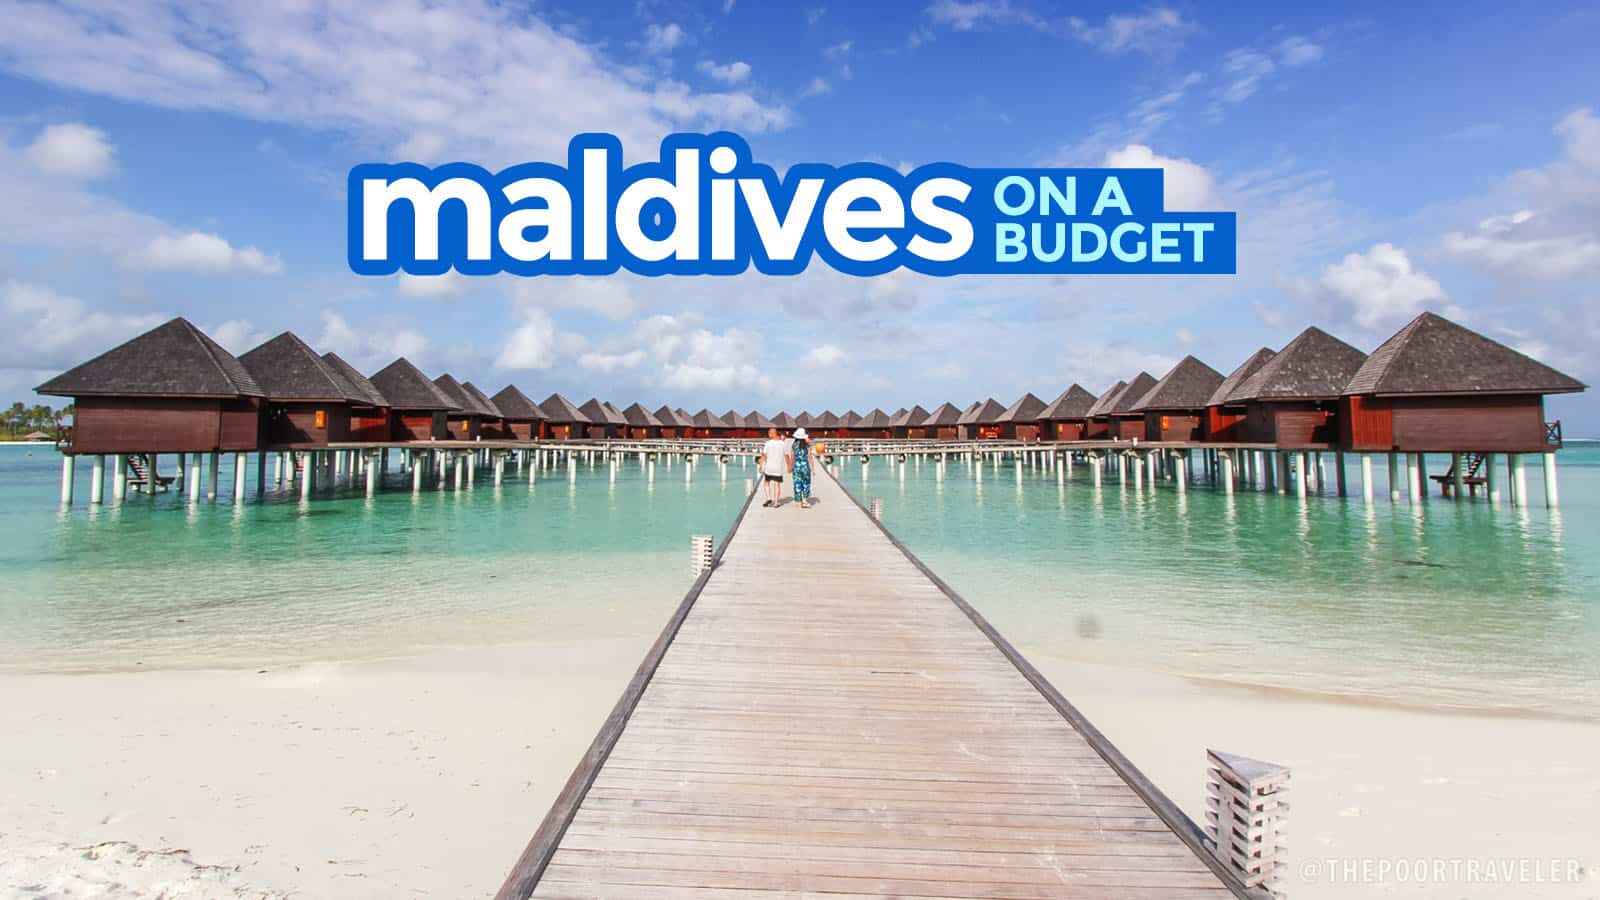 MALDIVES ON A BUDGET GUIDE